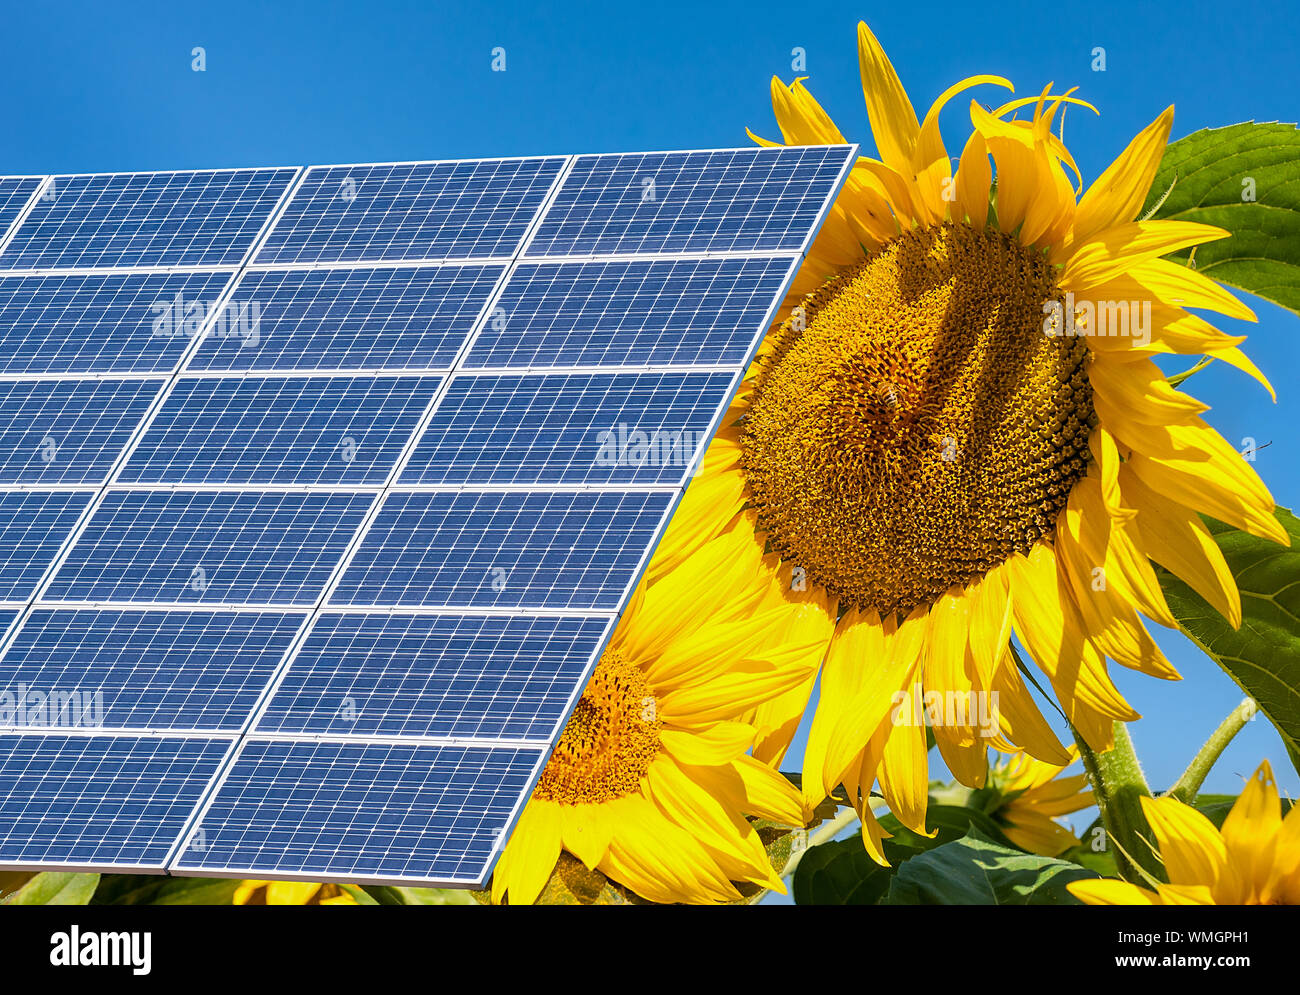 Sunflower With Solar Panel Immagini e Fotos Stock - Alamy